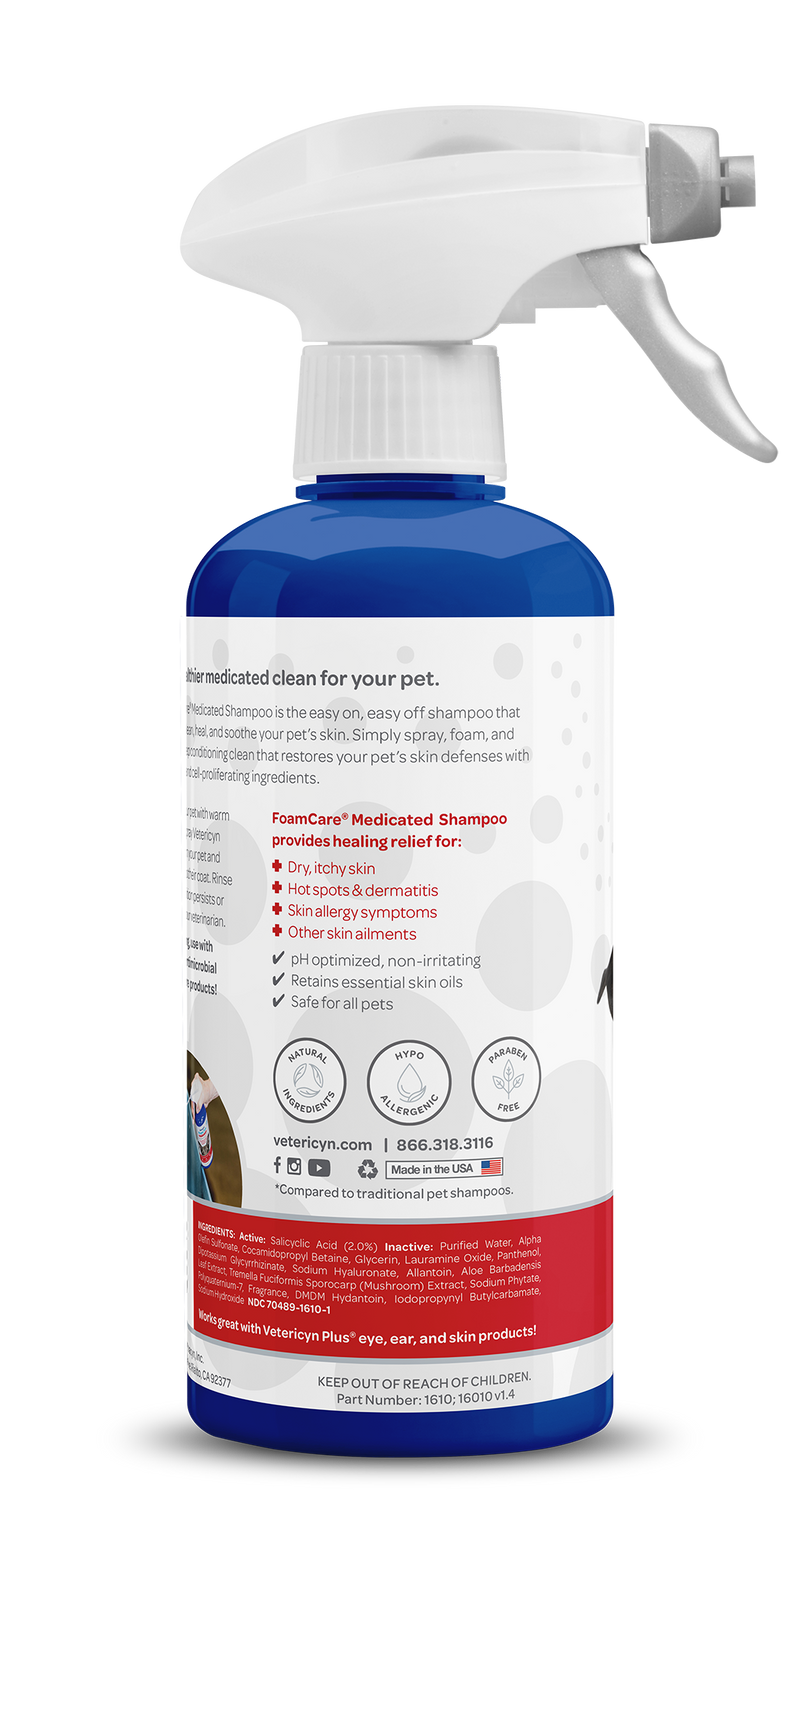 Vetericyn FoamCare Sprayable Medicated Shampoo for Dogs & Cats, 16-ounce